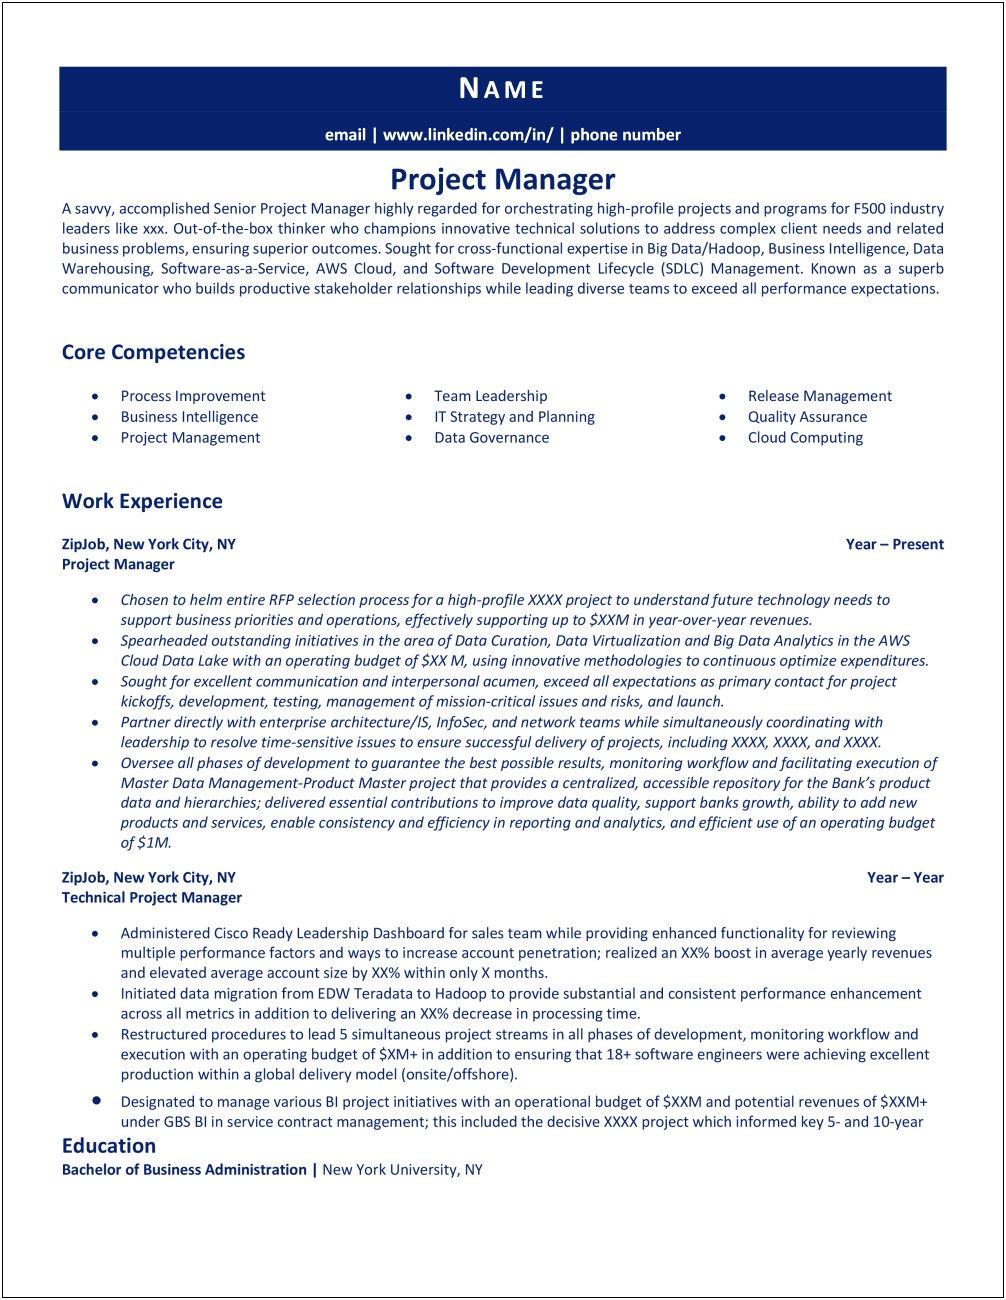 Resume Format For Release Management